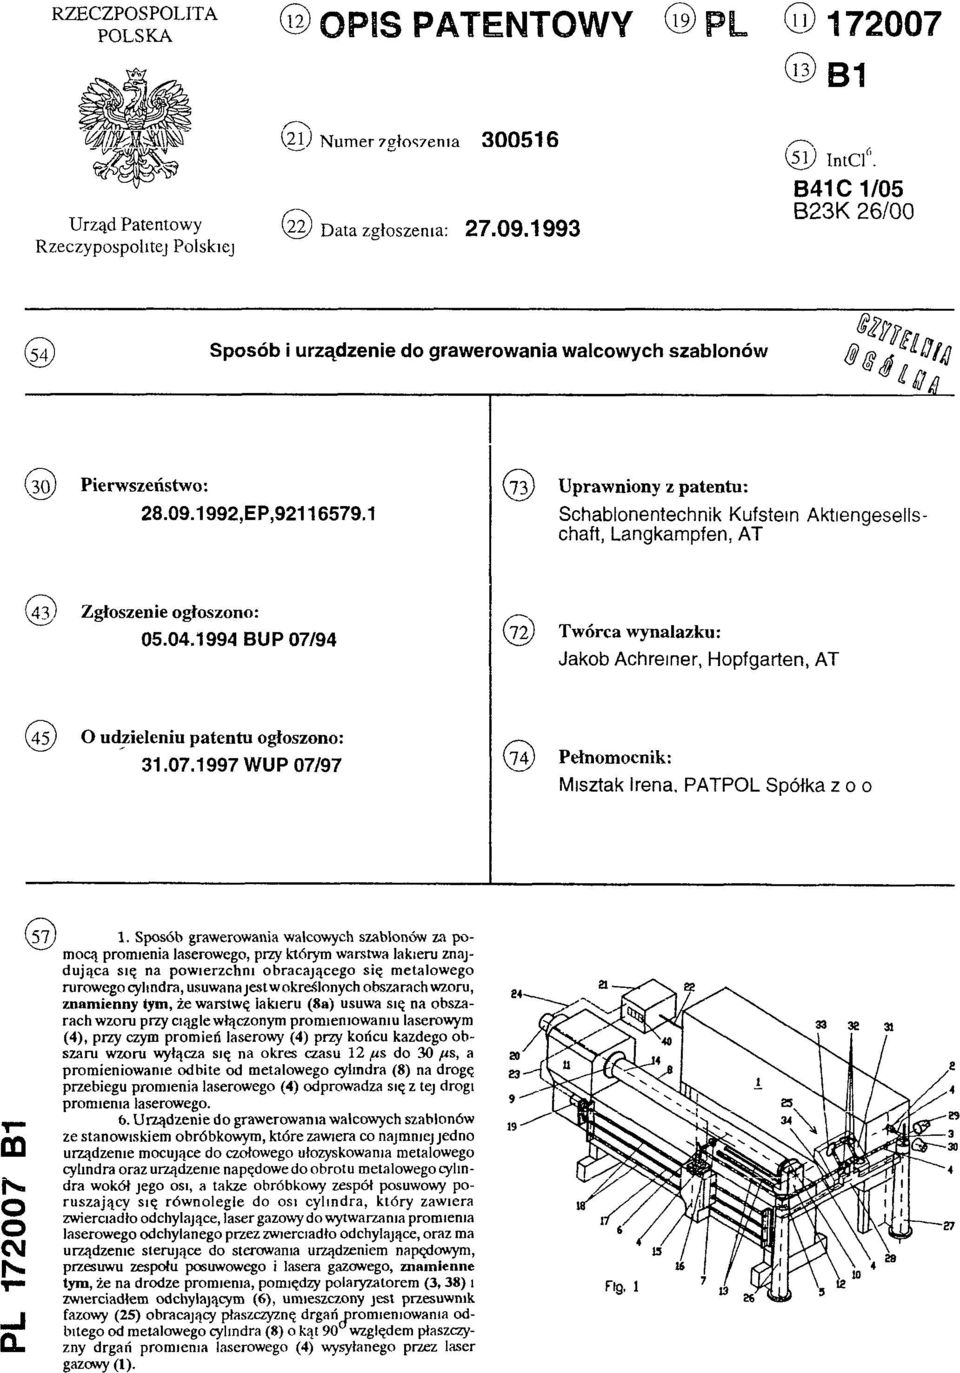 1 (73) Uprawniony z patentu: Schablonentechnik Kufstein Aktiengesellschaft, Langkampfen, AT (43)Zgłoszenie ogłoszono: 05.04.